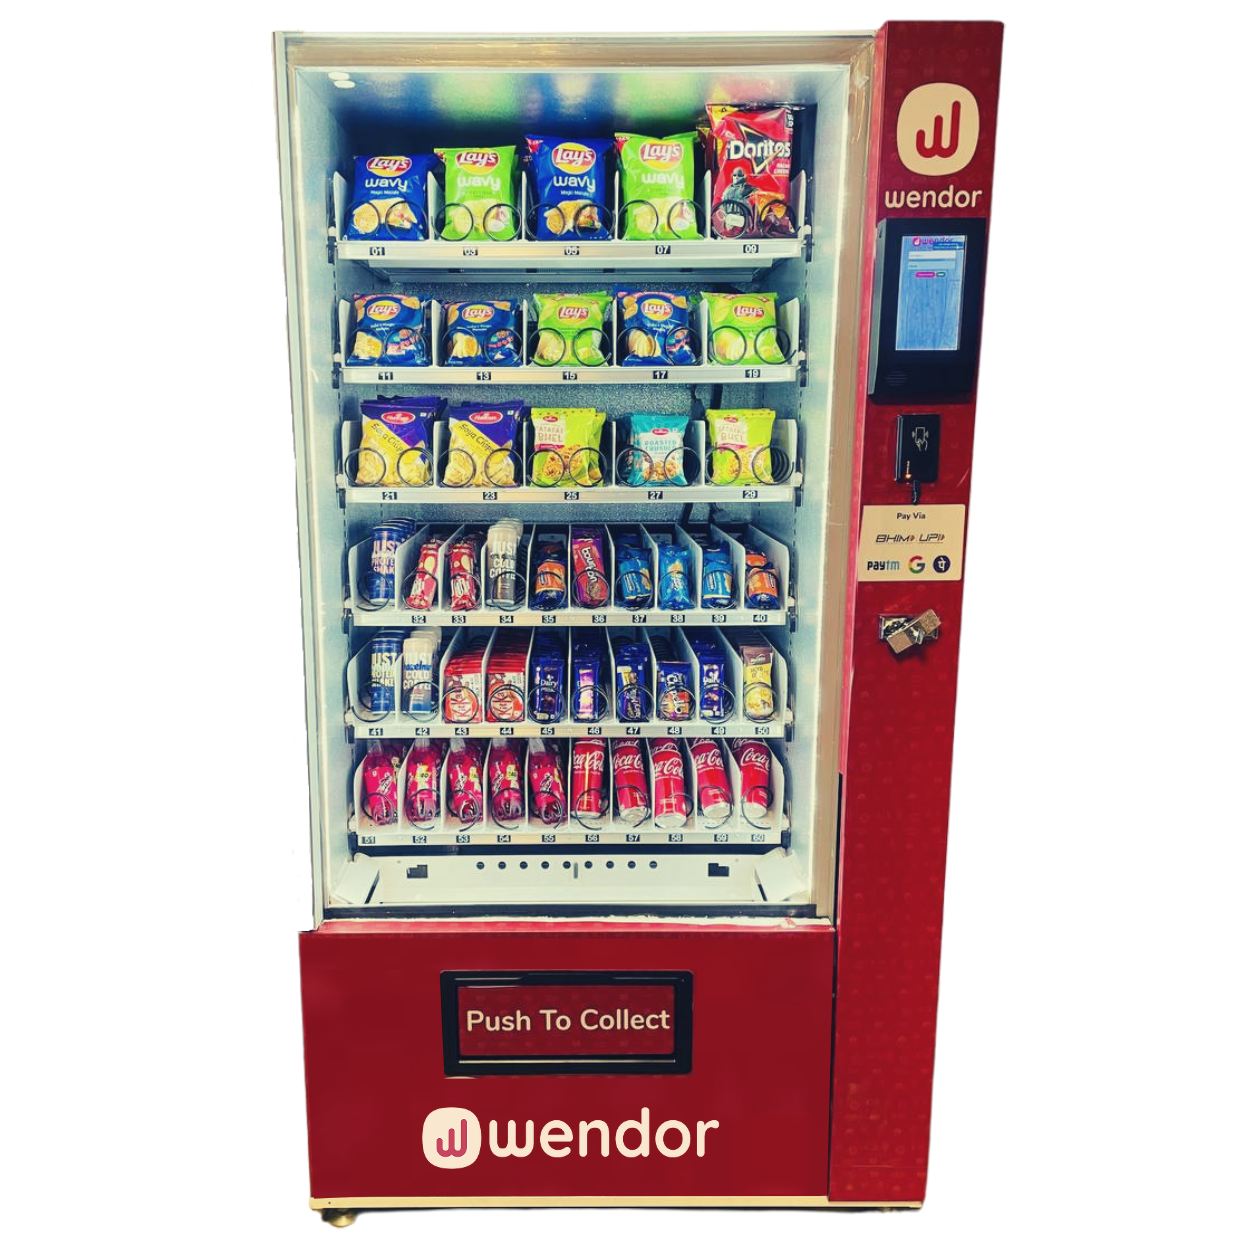 Wendor Mark - Vending Machine